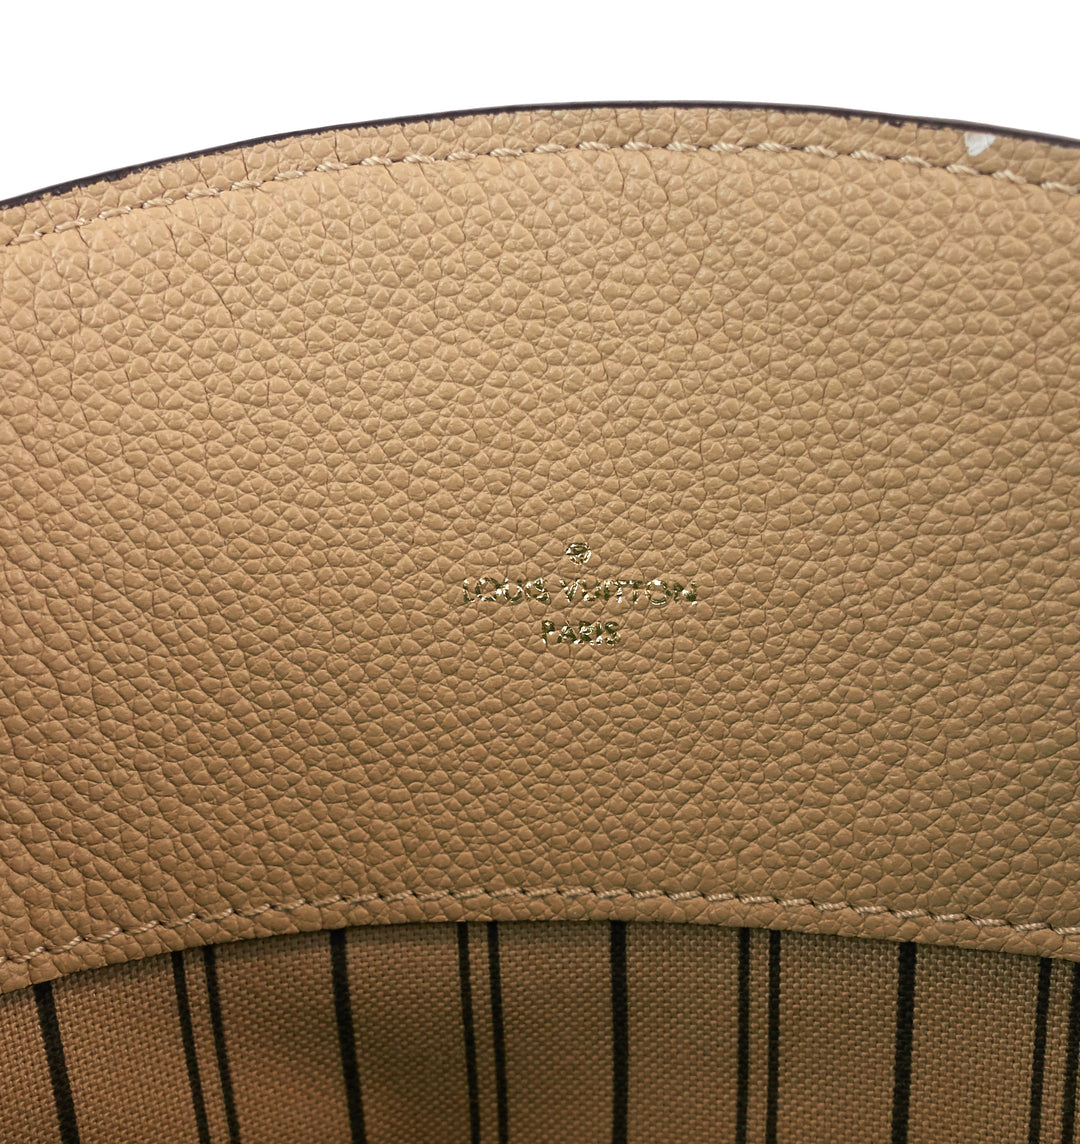 Bagatelle leather handbag Louis Vuitton Orange in Leather - 27825402